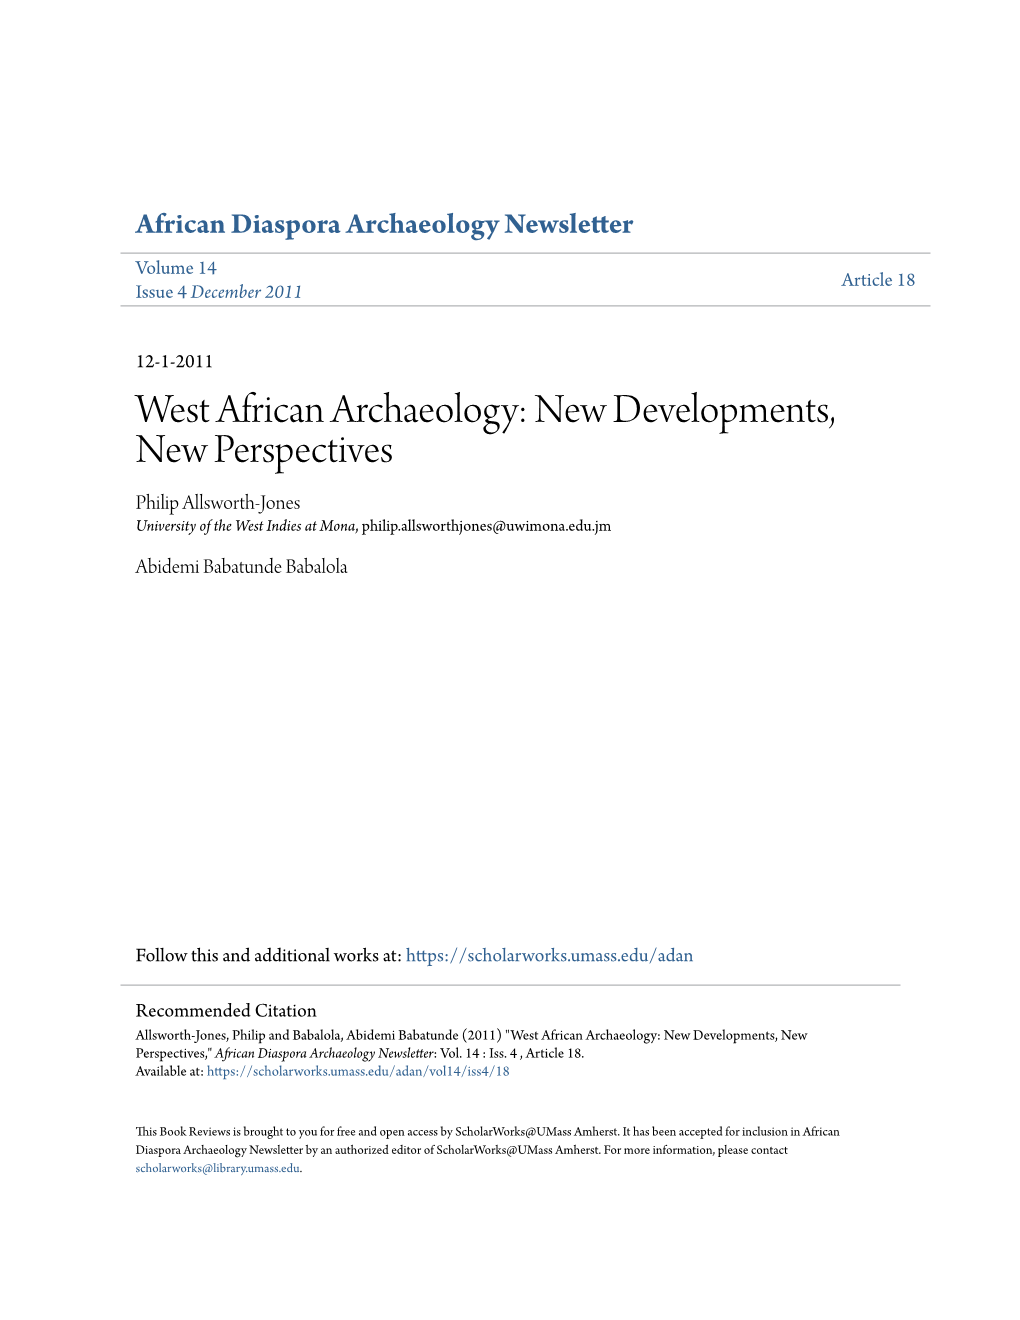 West African Archaeology: New Developments, New Perspectives Philip Allsworth-Jones University of the West Indies at Mona, Philip.Allsworthjones@Uwimona.Edu.Jm